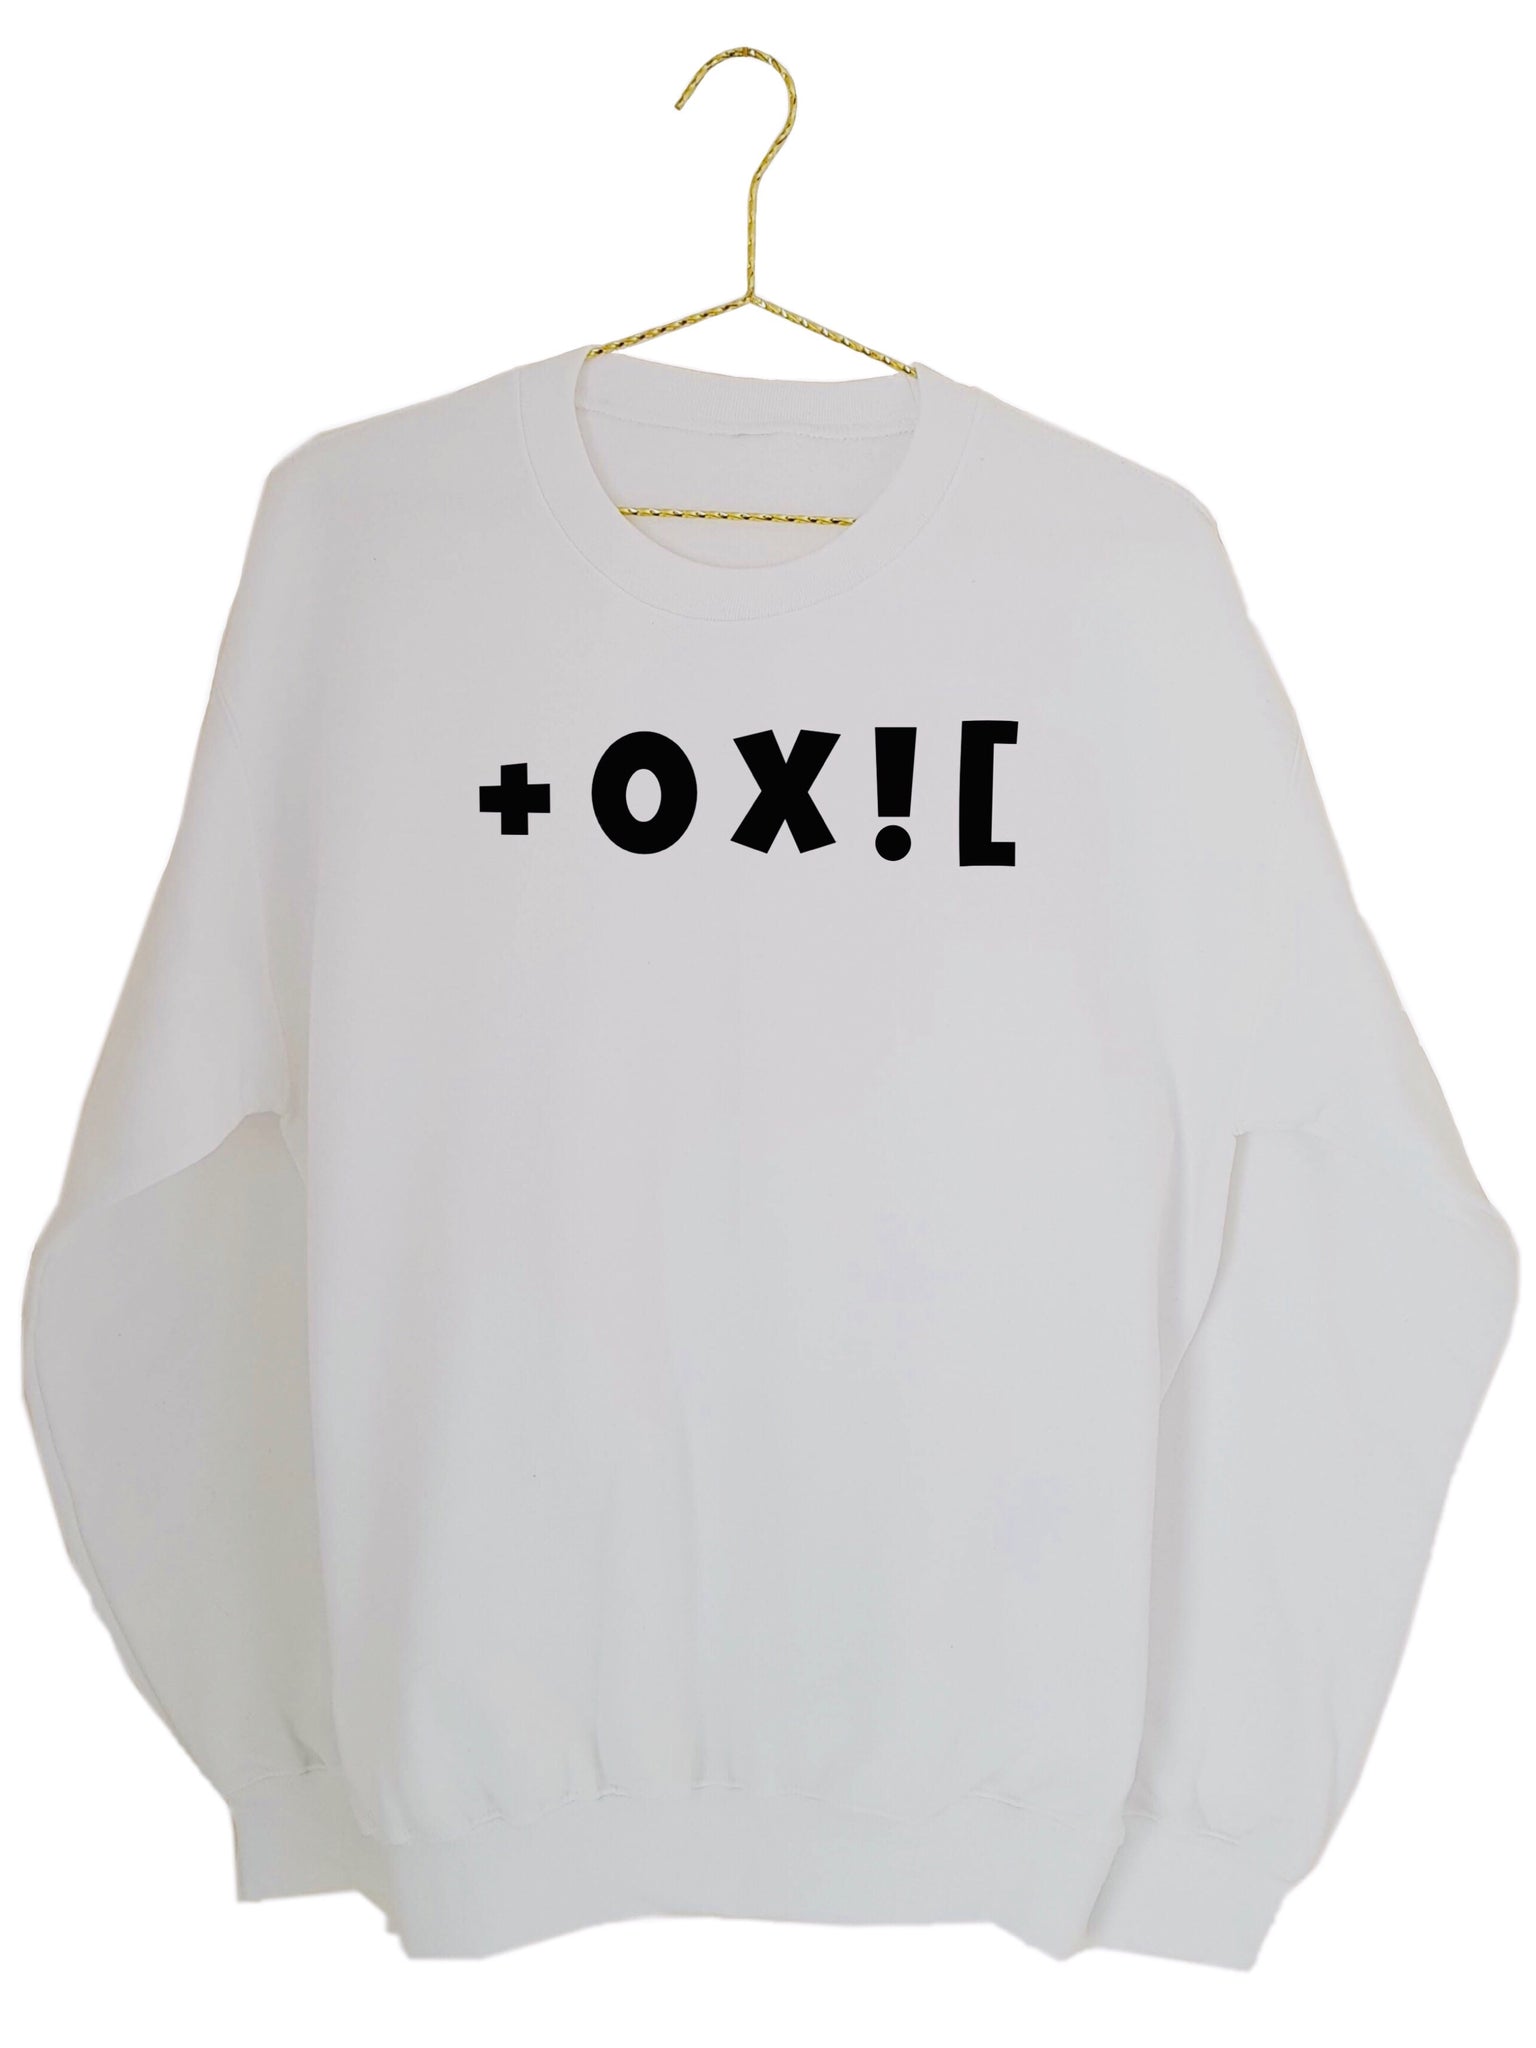 Toxic Sweatshirt - White (Unisex)